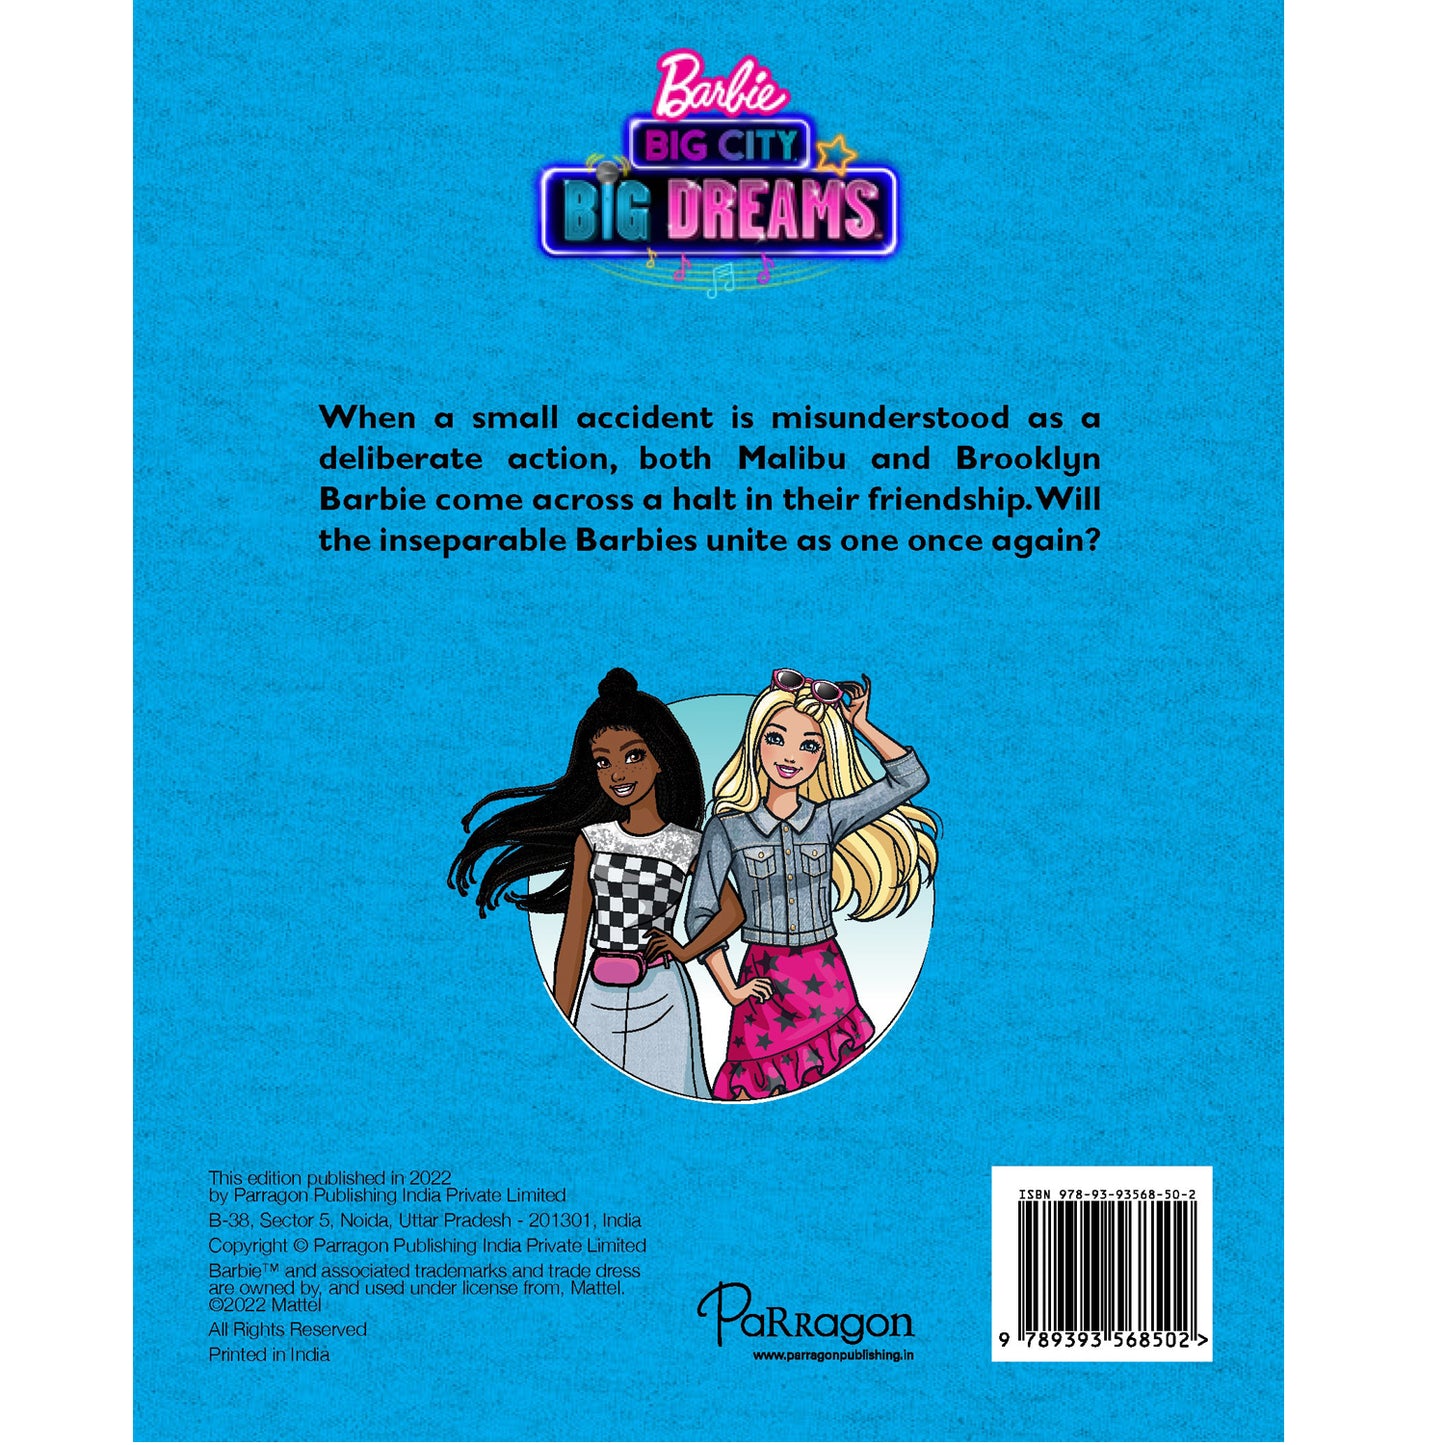 Barbie Big City Big Dreams Movie Storybook